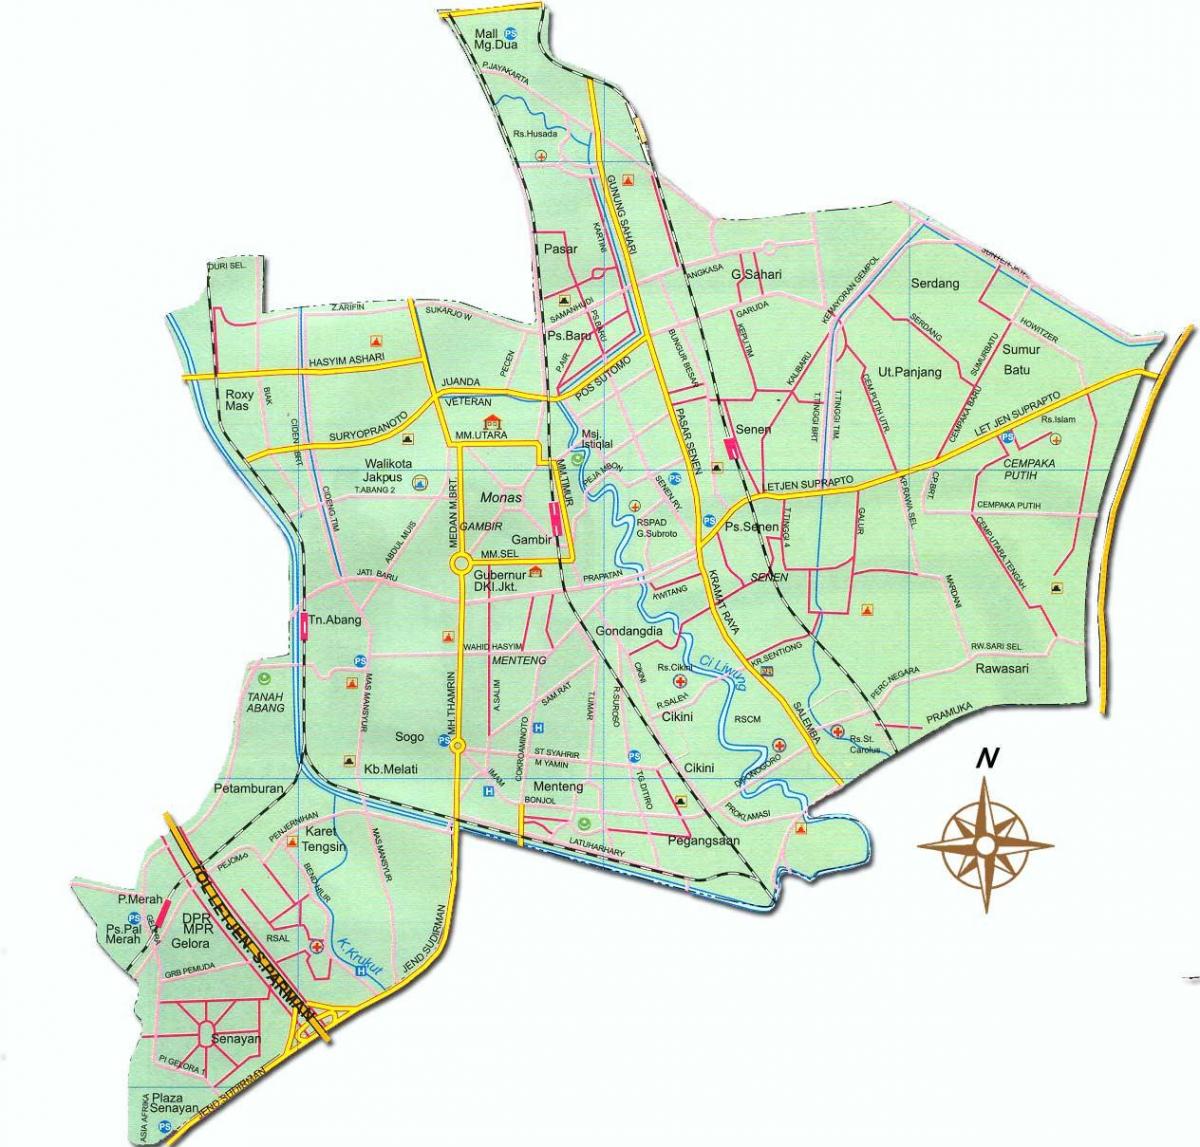 zemljevid Jakarta pusat